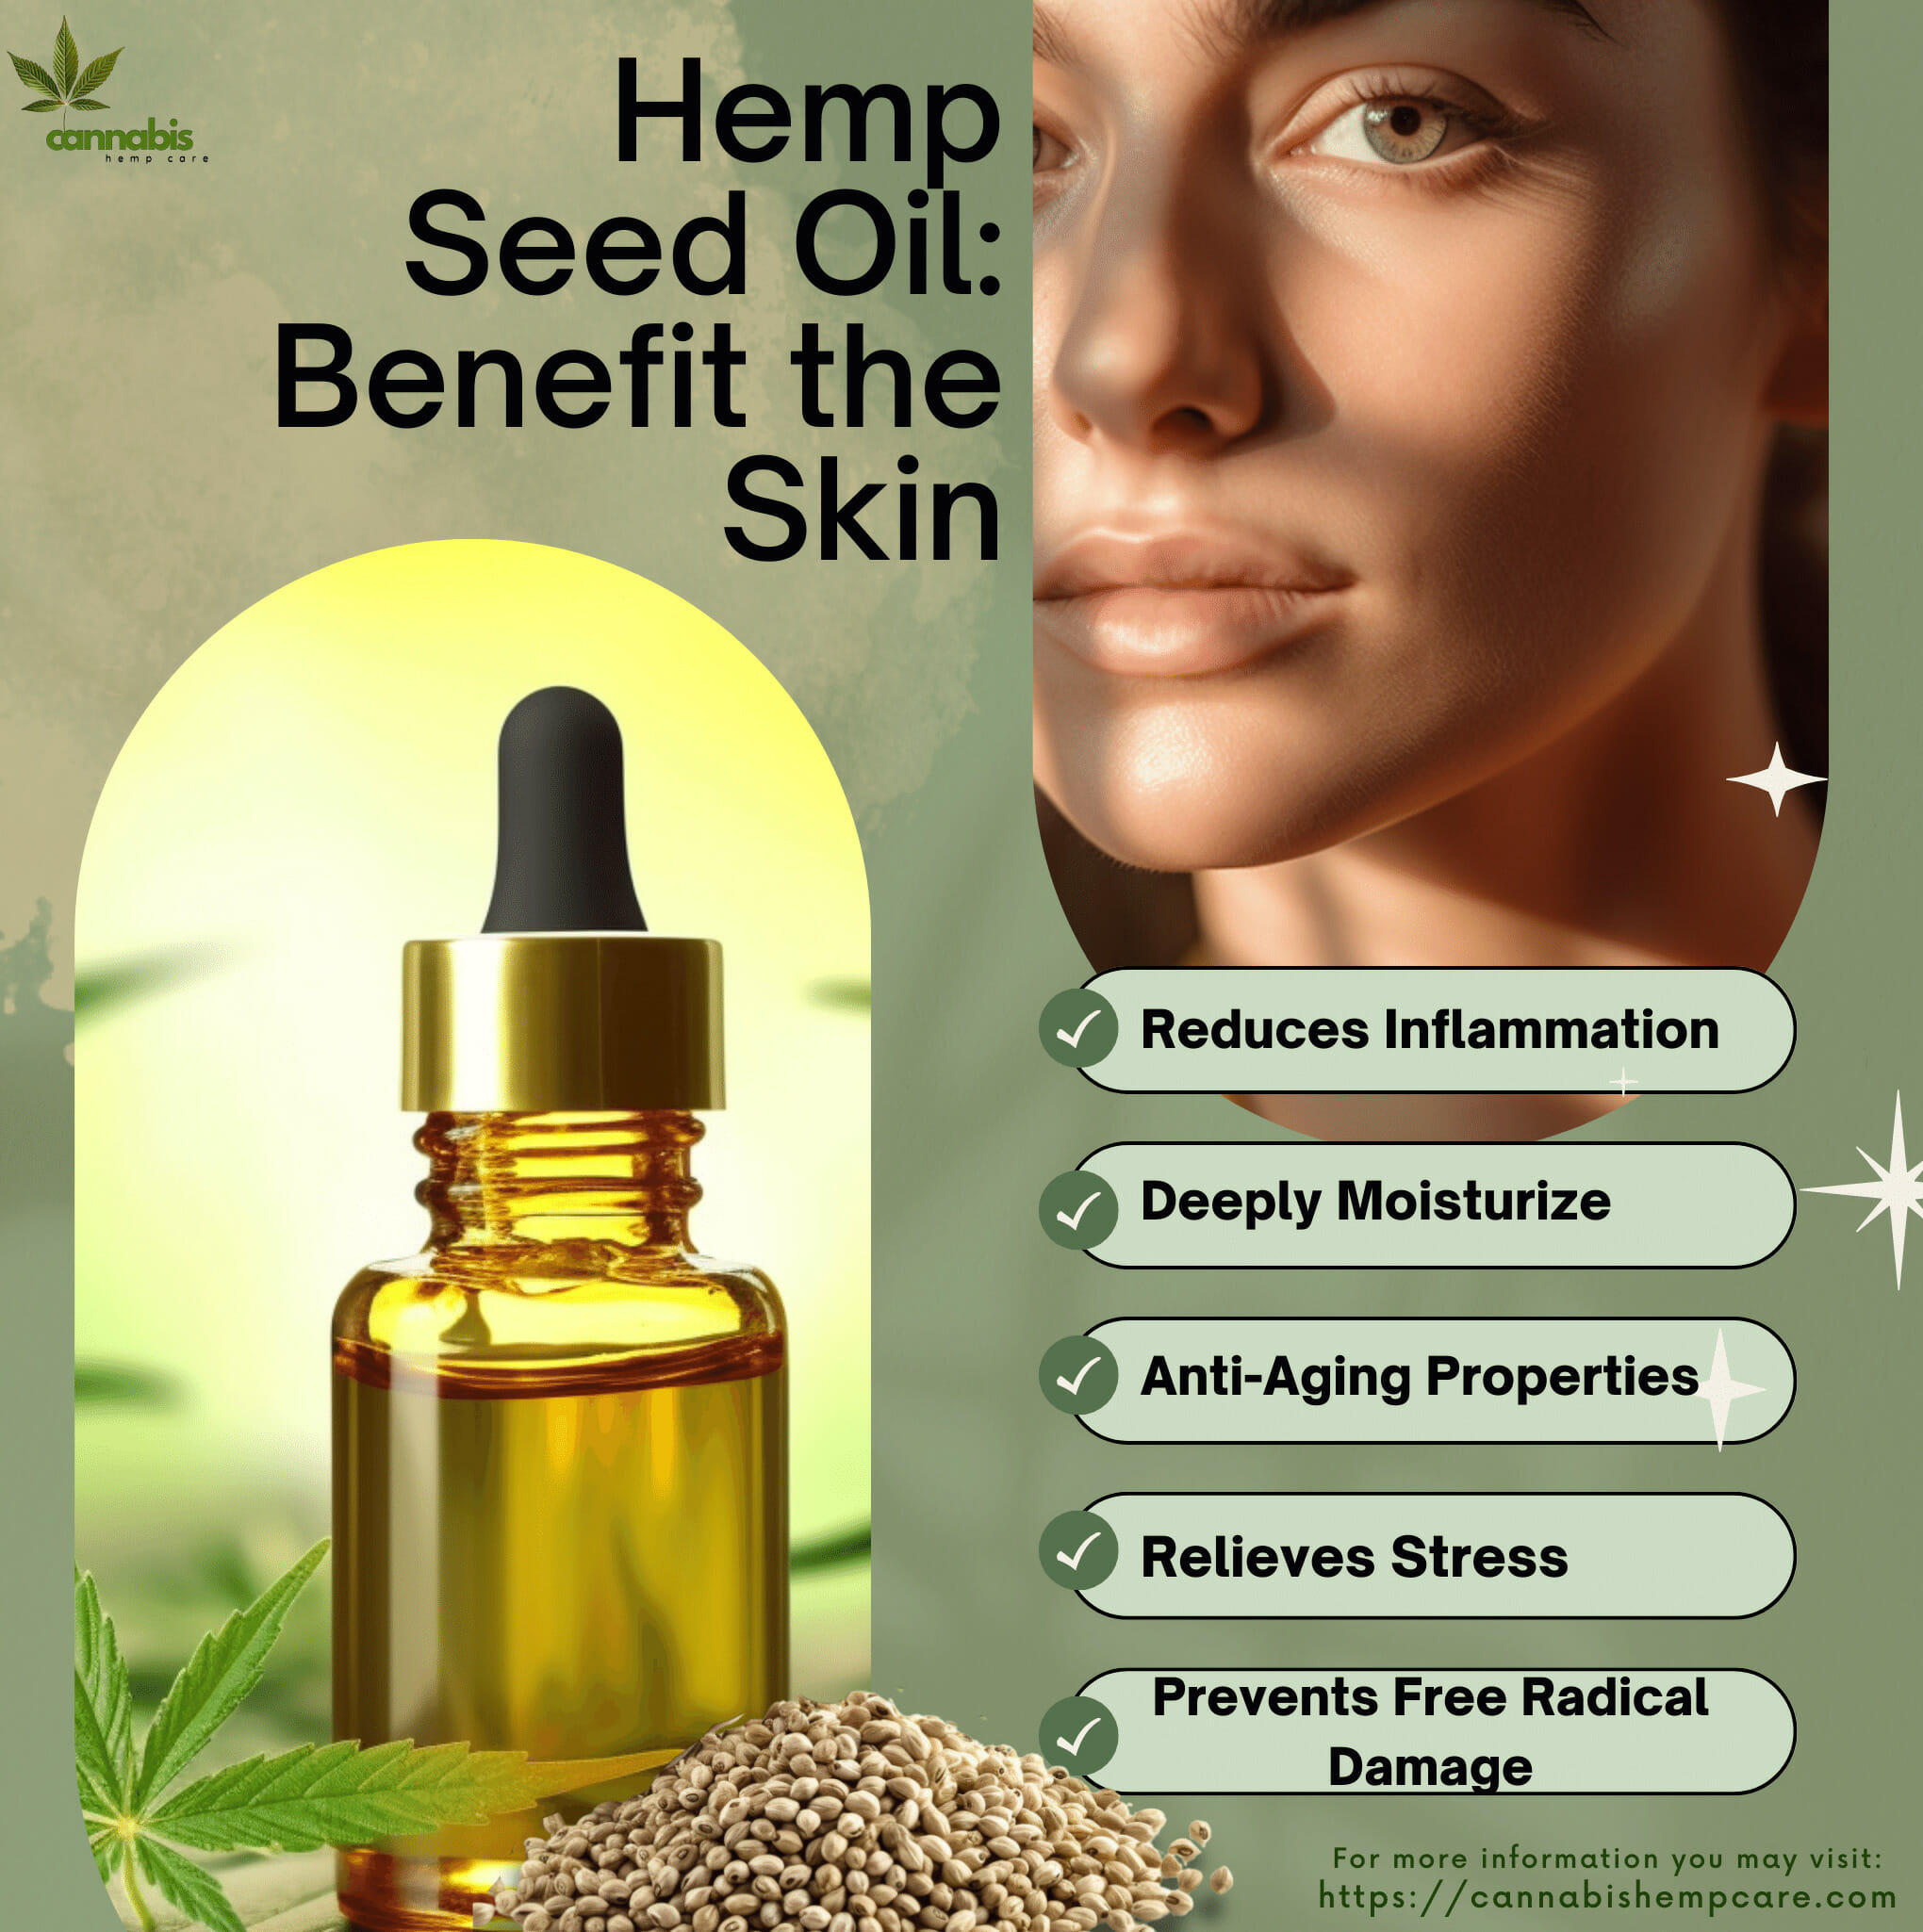 hemp seed oil, benefit the skin